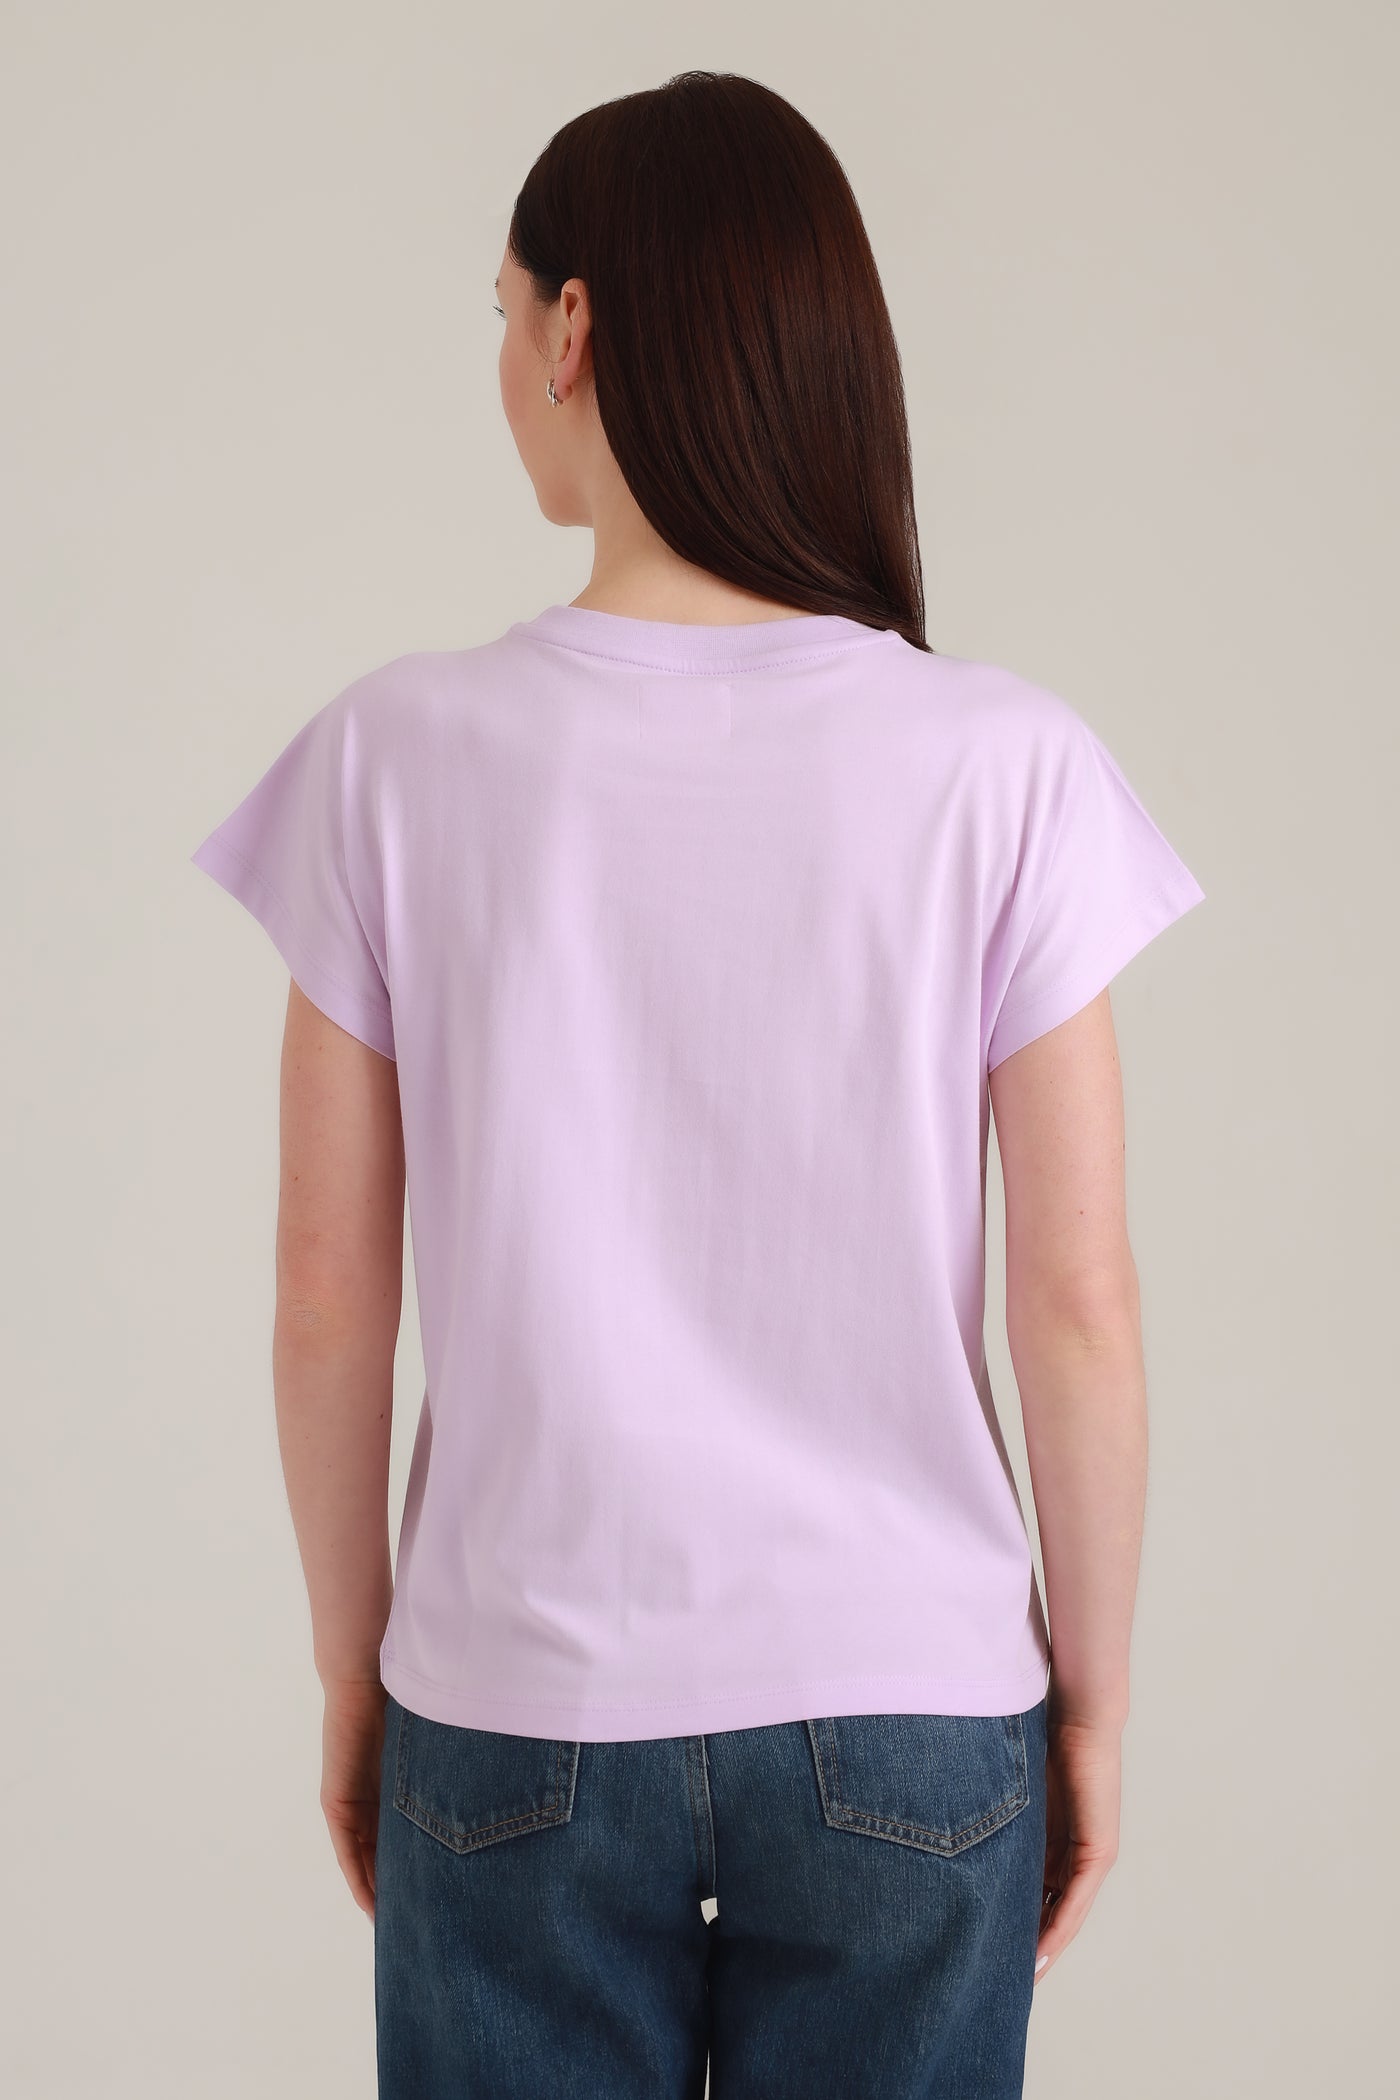 T-Shirt Women Short Sleeves Dog Band Lavender